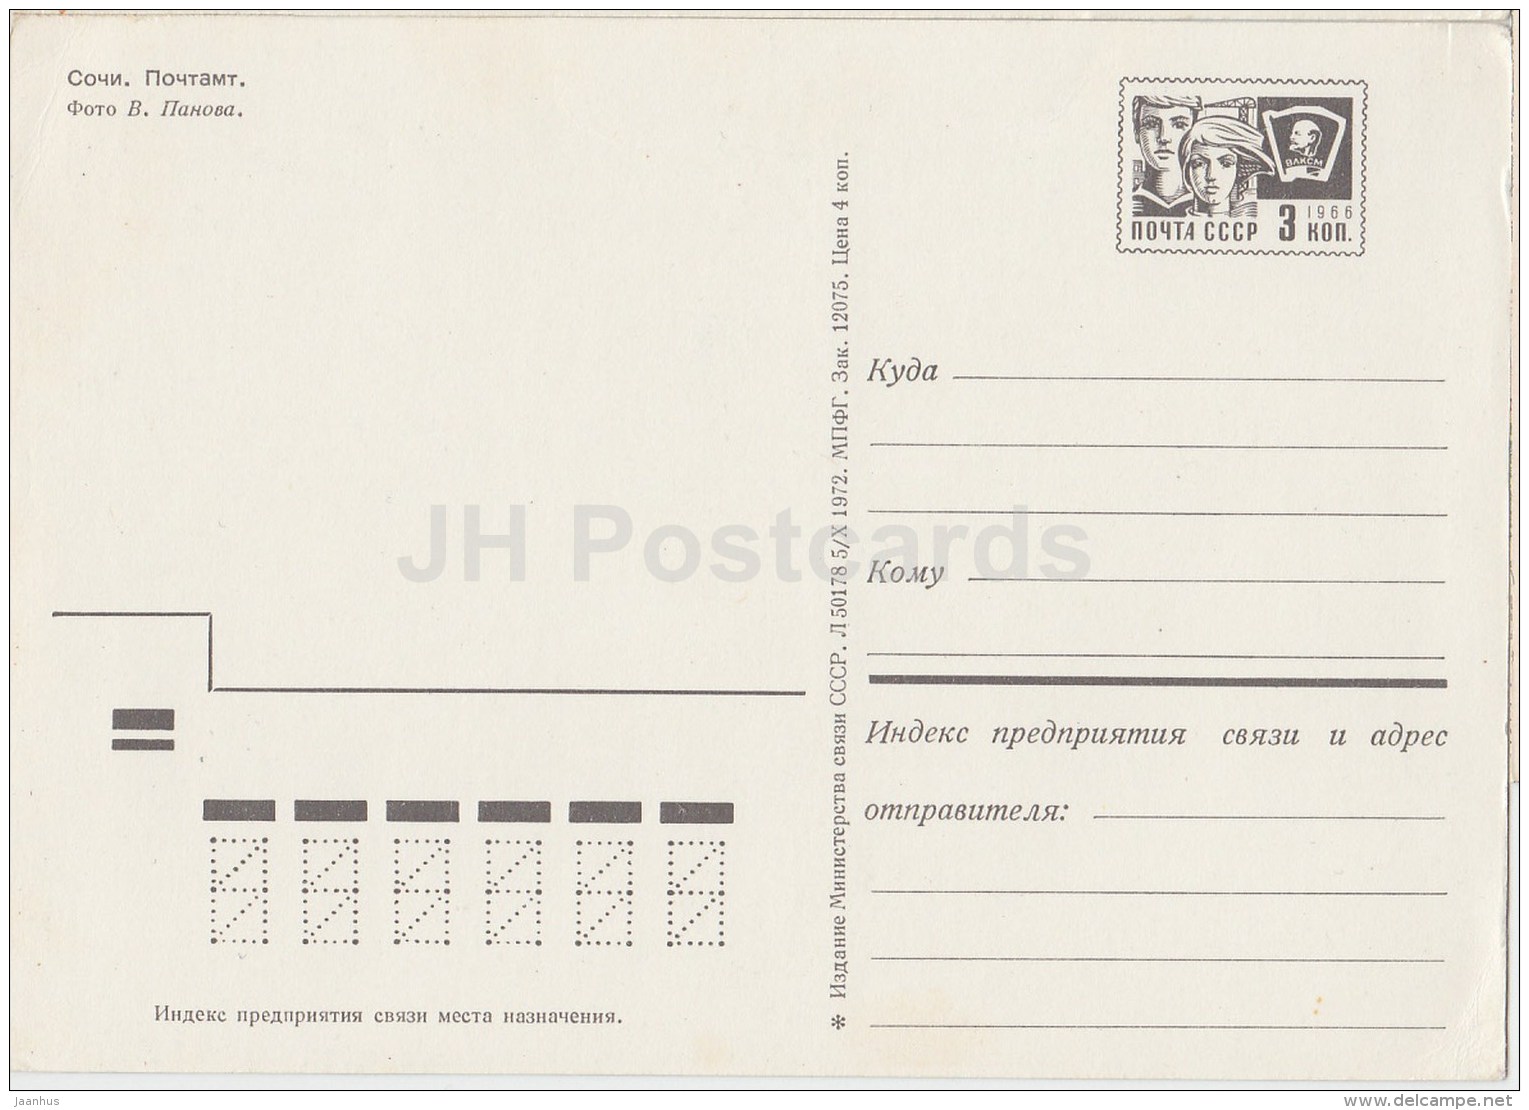 Post Office - Sochi - Postal Stationery - 1972 - Russia USSR - Unused - Russia